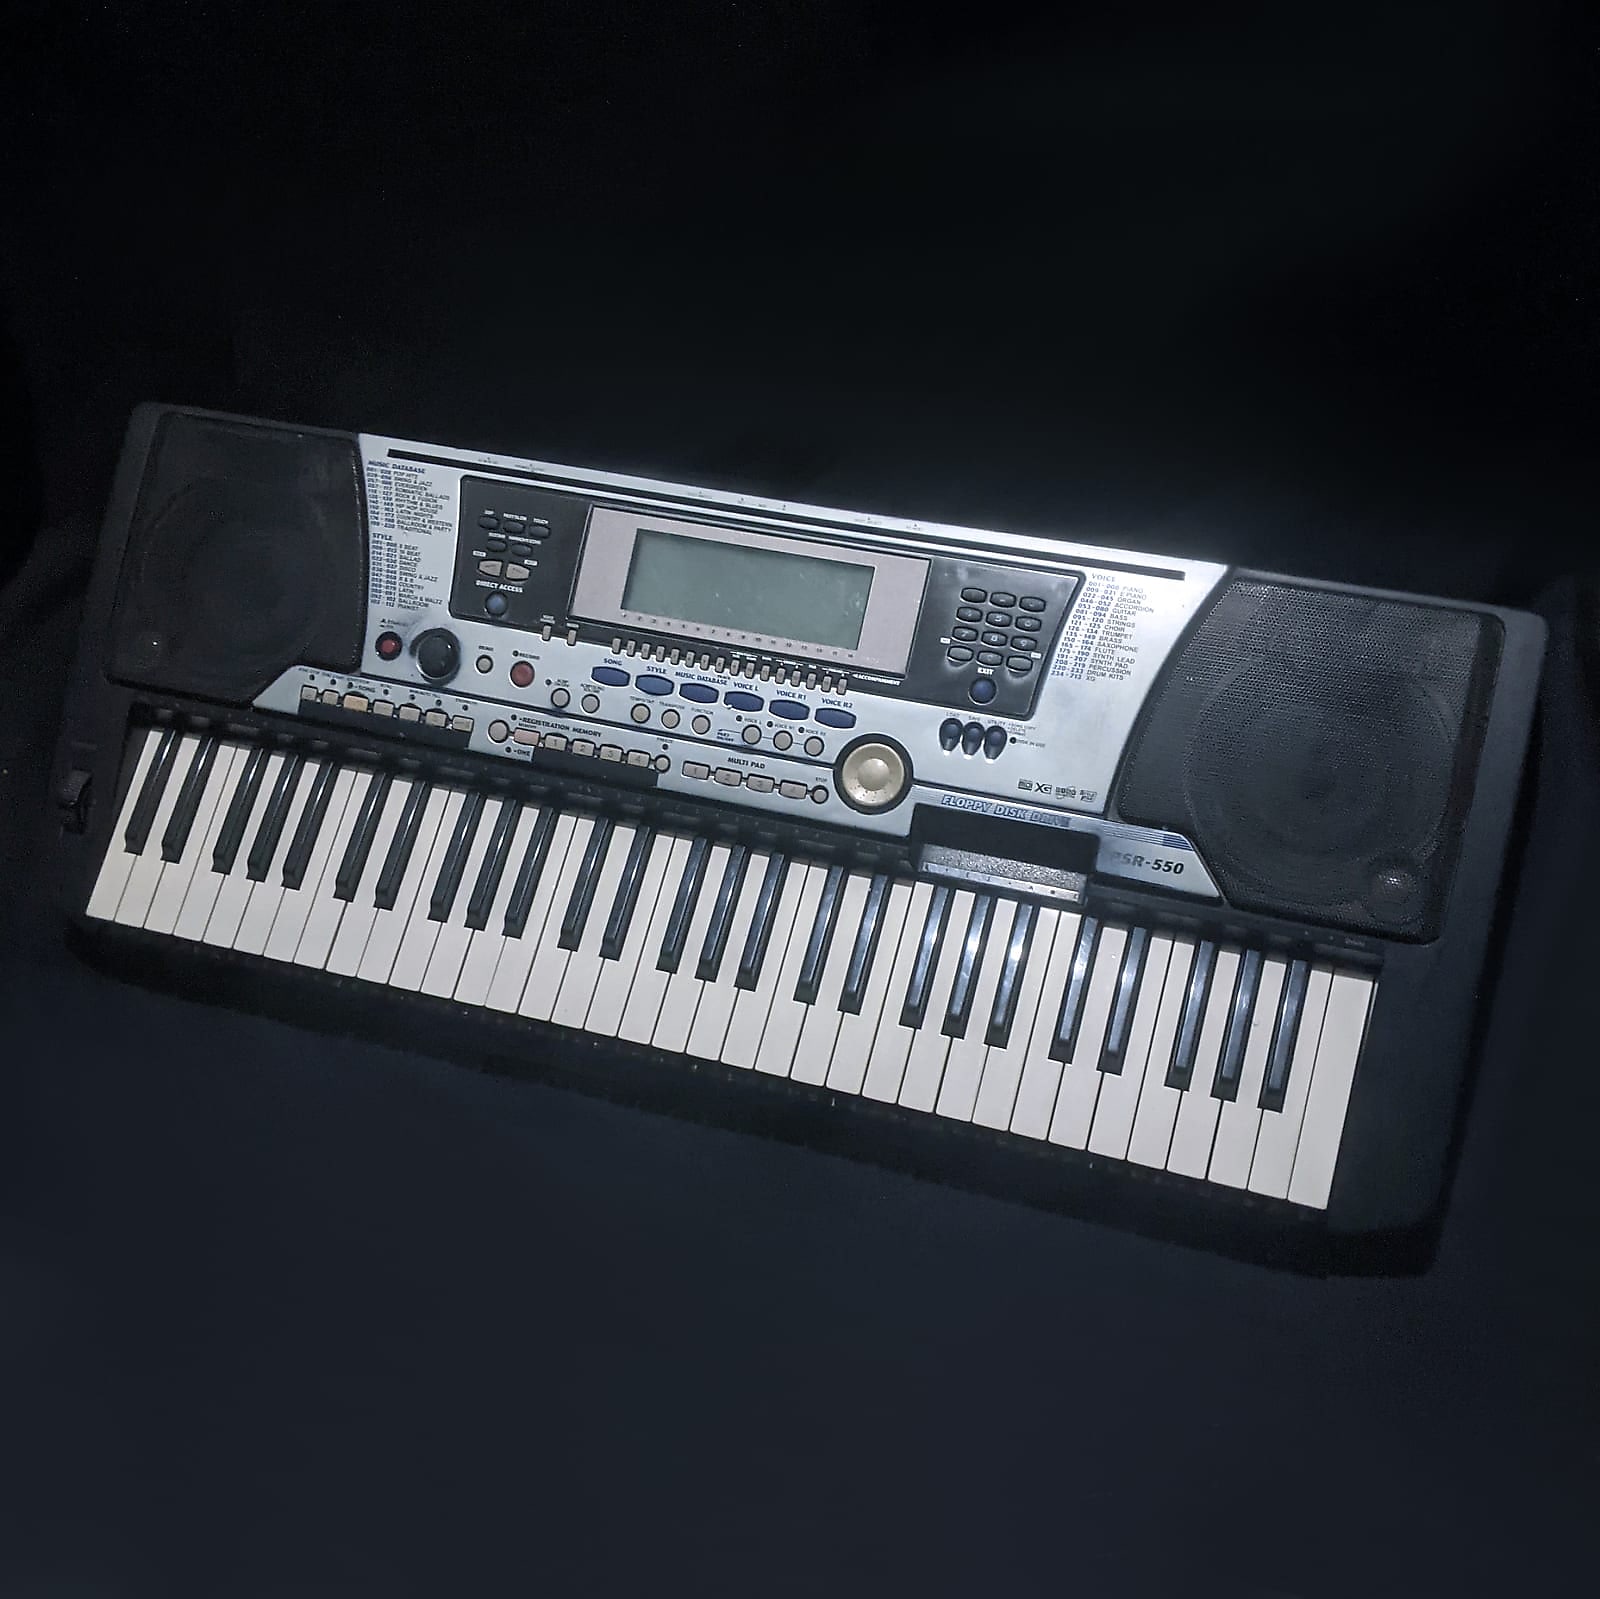 Yamaha PSR-550 The Ultimate Professional Keyboard